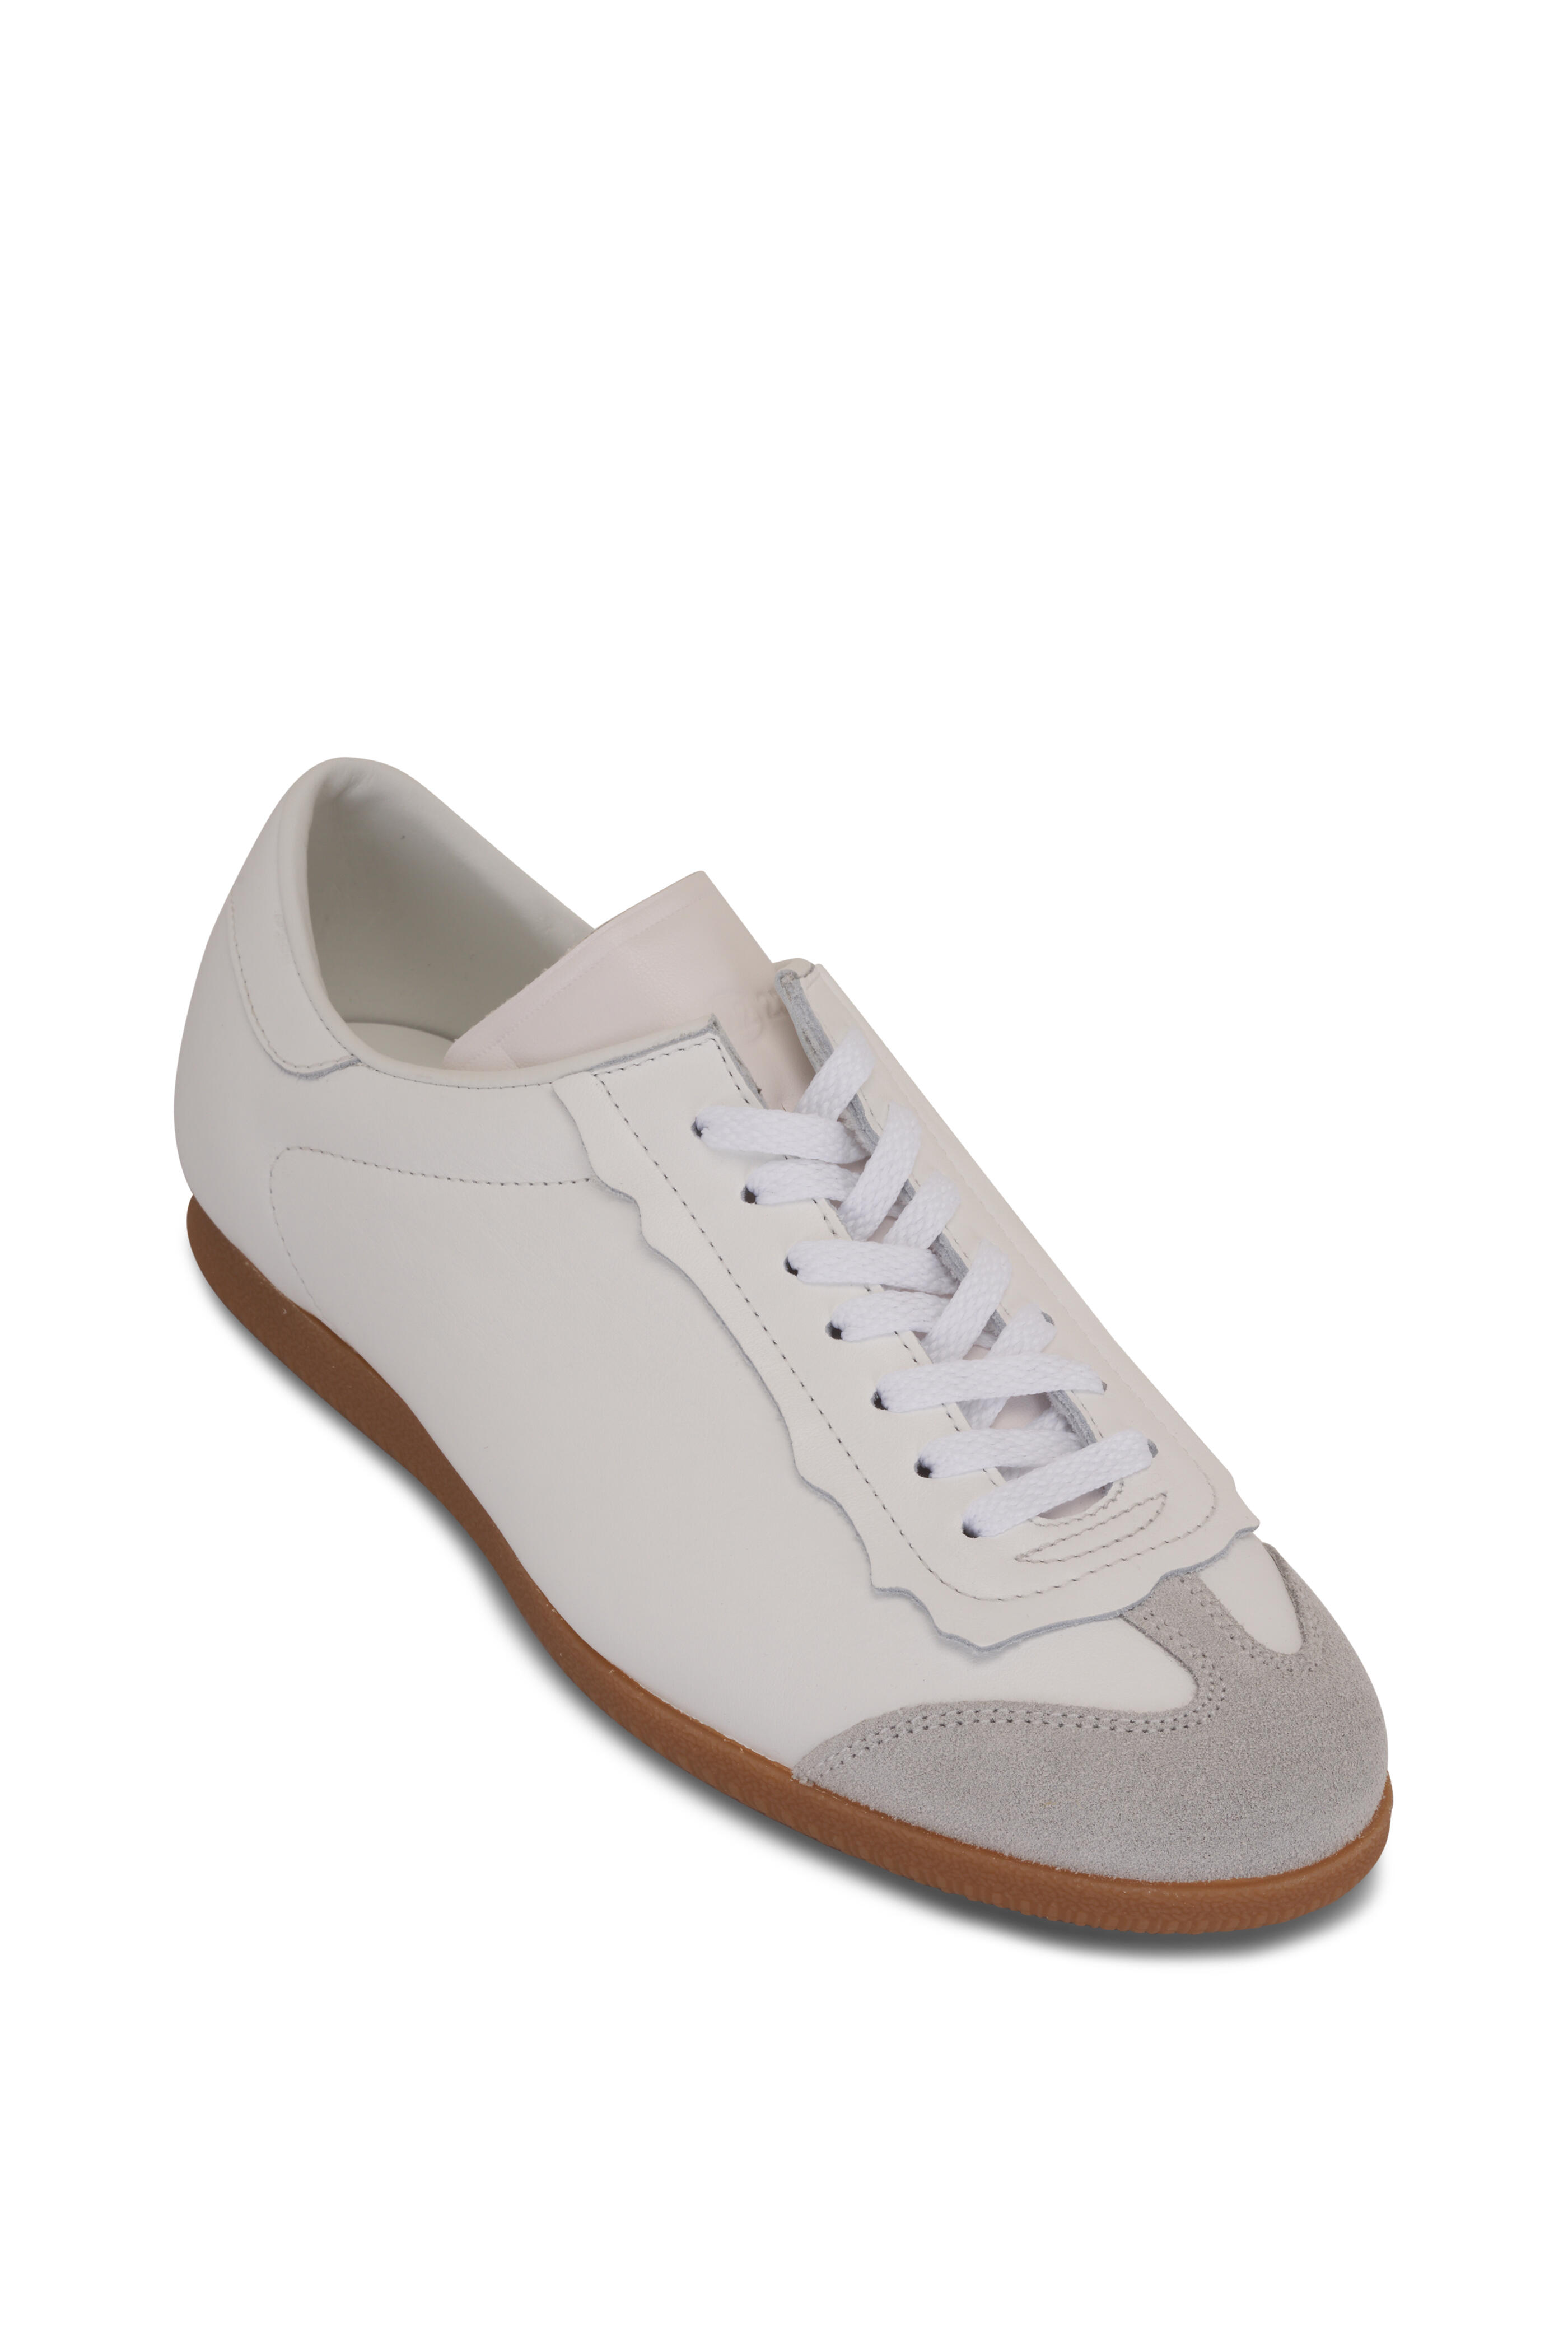 Maison Margiela - White Leather Sneaker